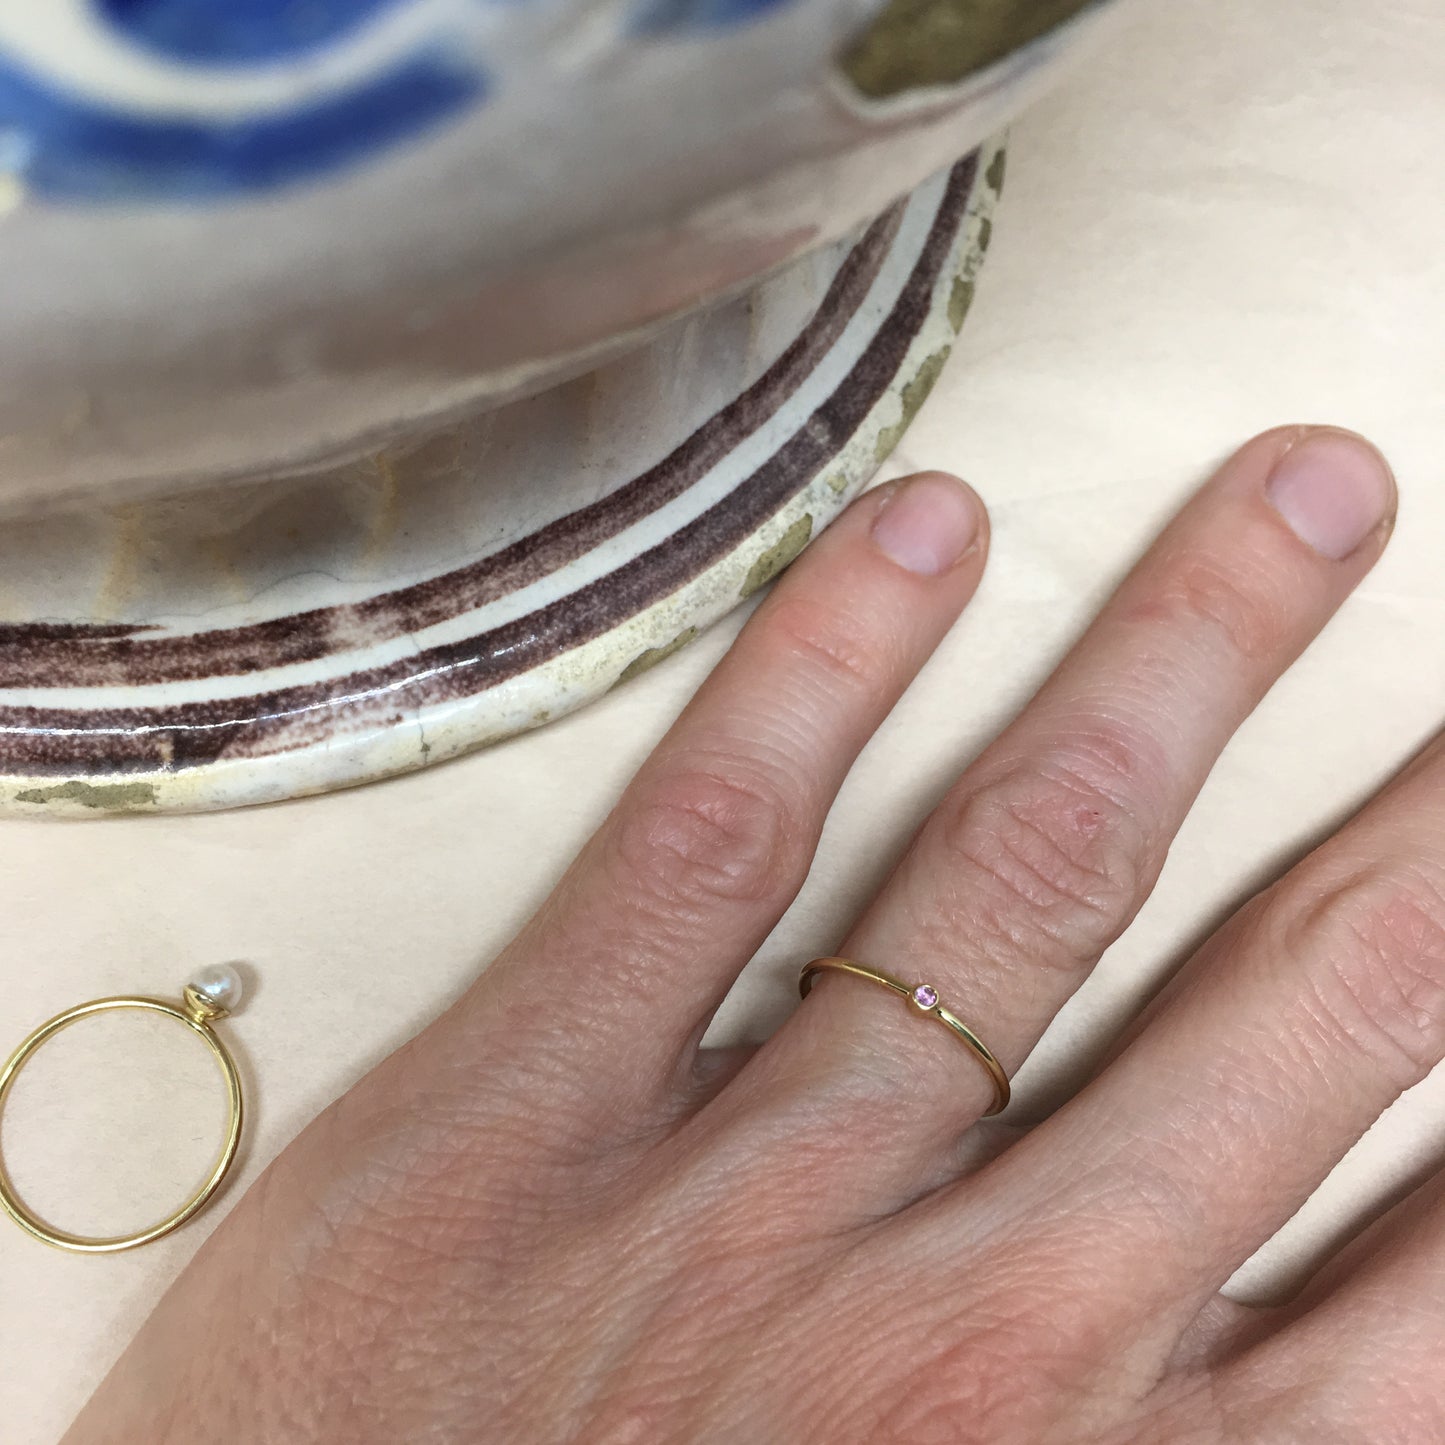 Mini classic ring.